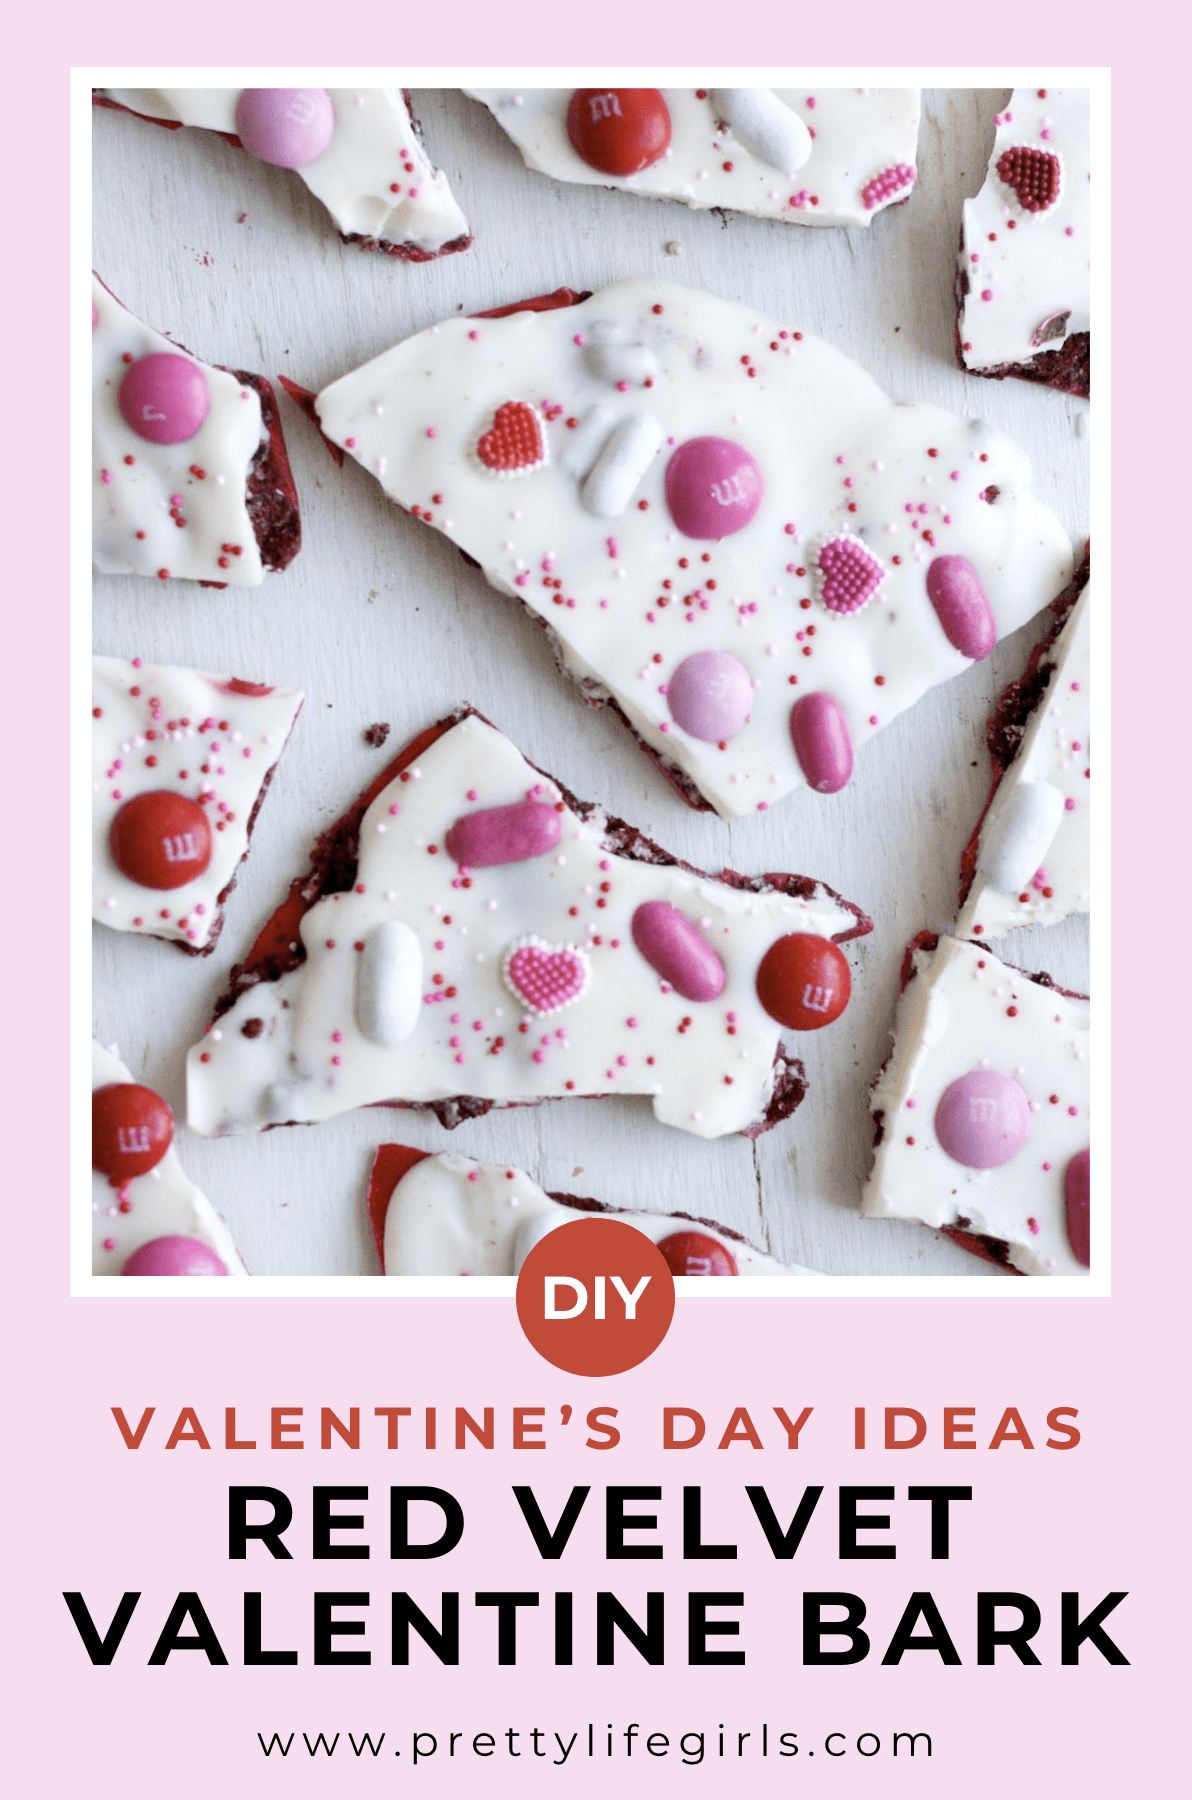 DIY Valentine's Day Ideas Red Velvet Valentine Bark from the Pretty Life Girls